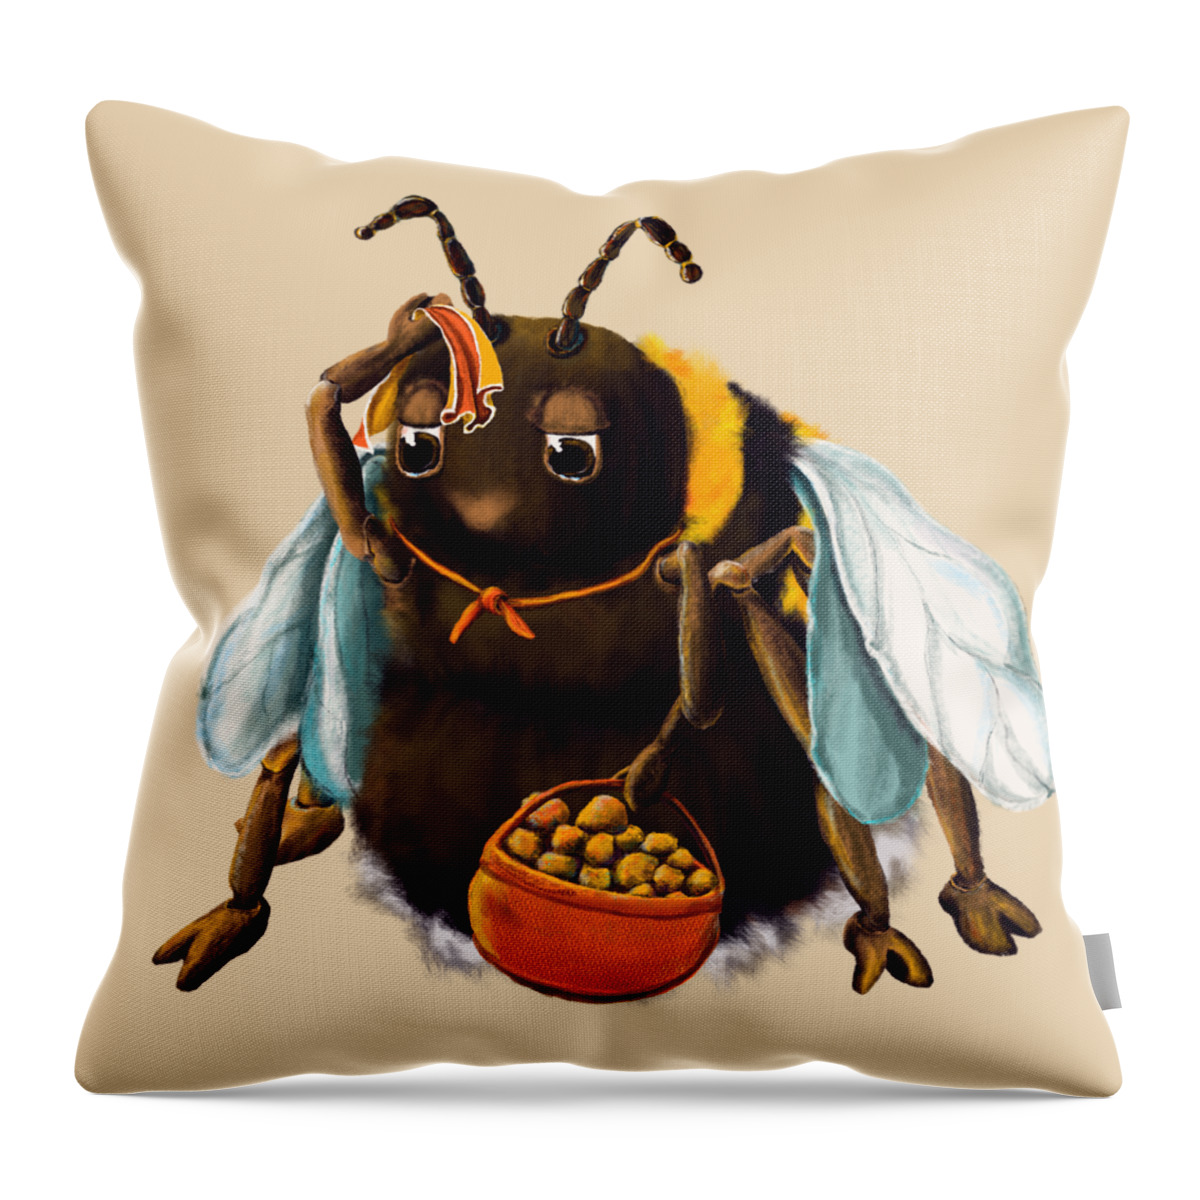 Bumblebee Throw Pillow featuring the digital art Hildtrud Hummel the Bumblebee by Mandy Tabatt